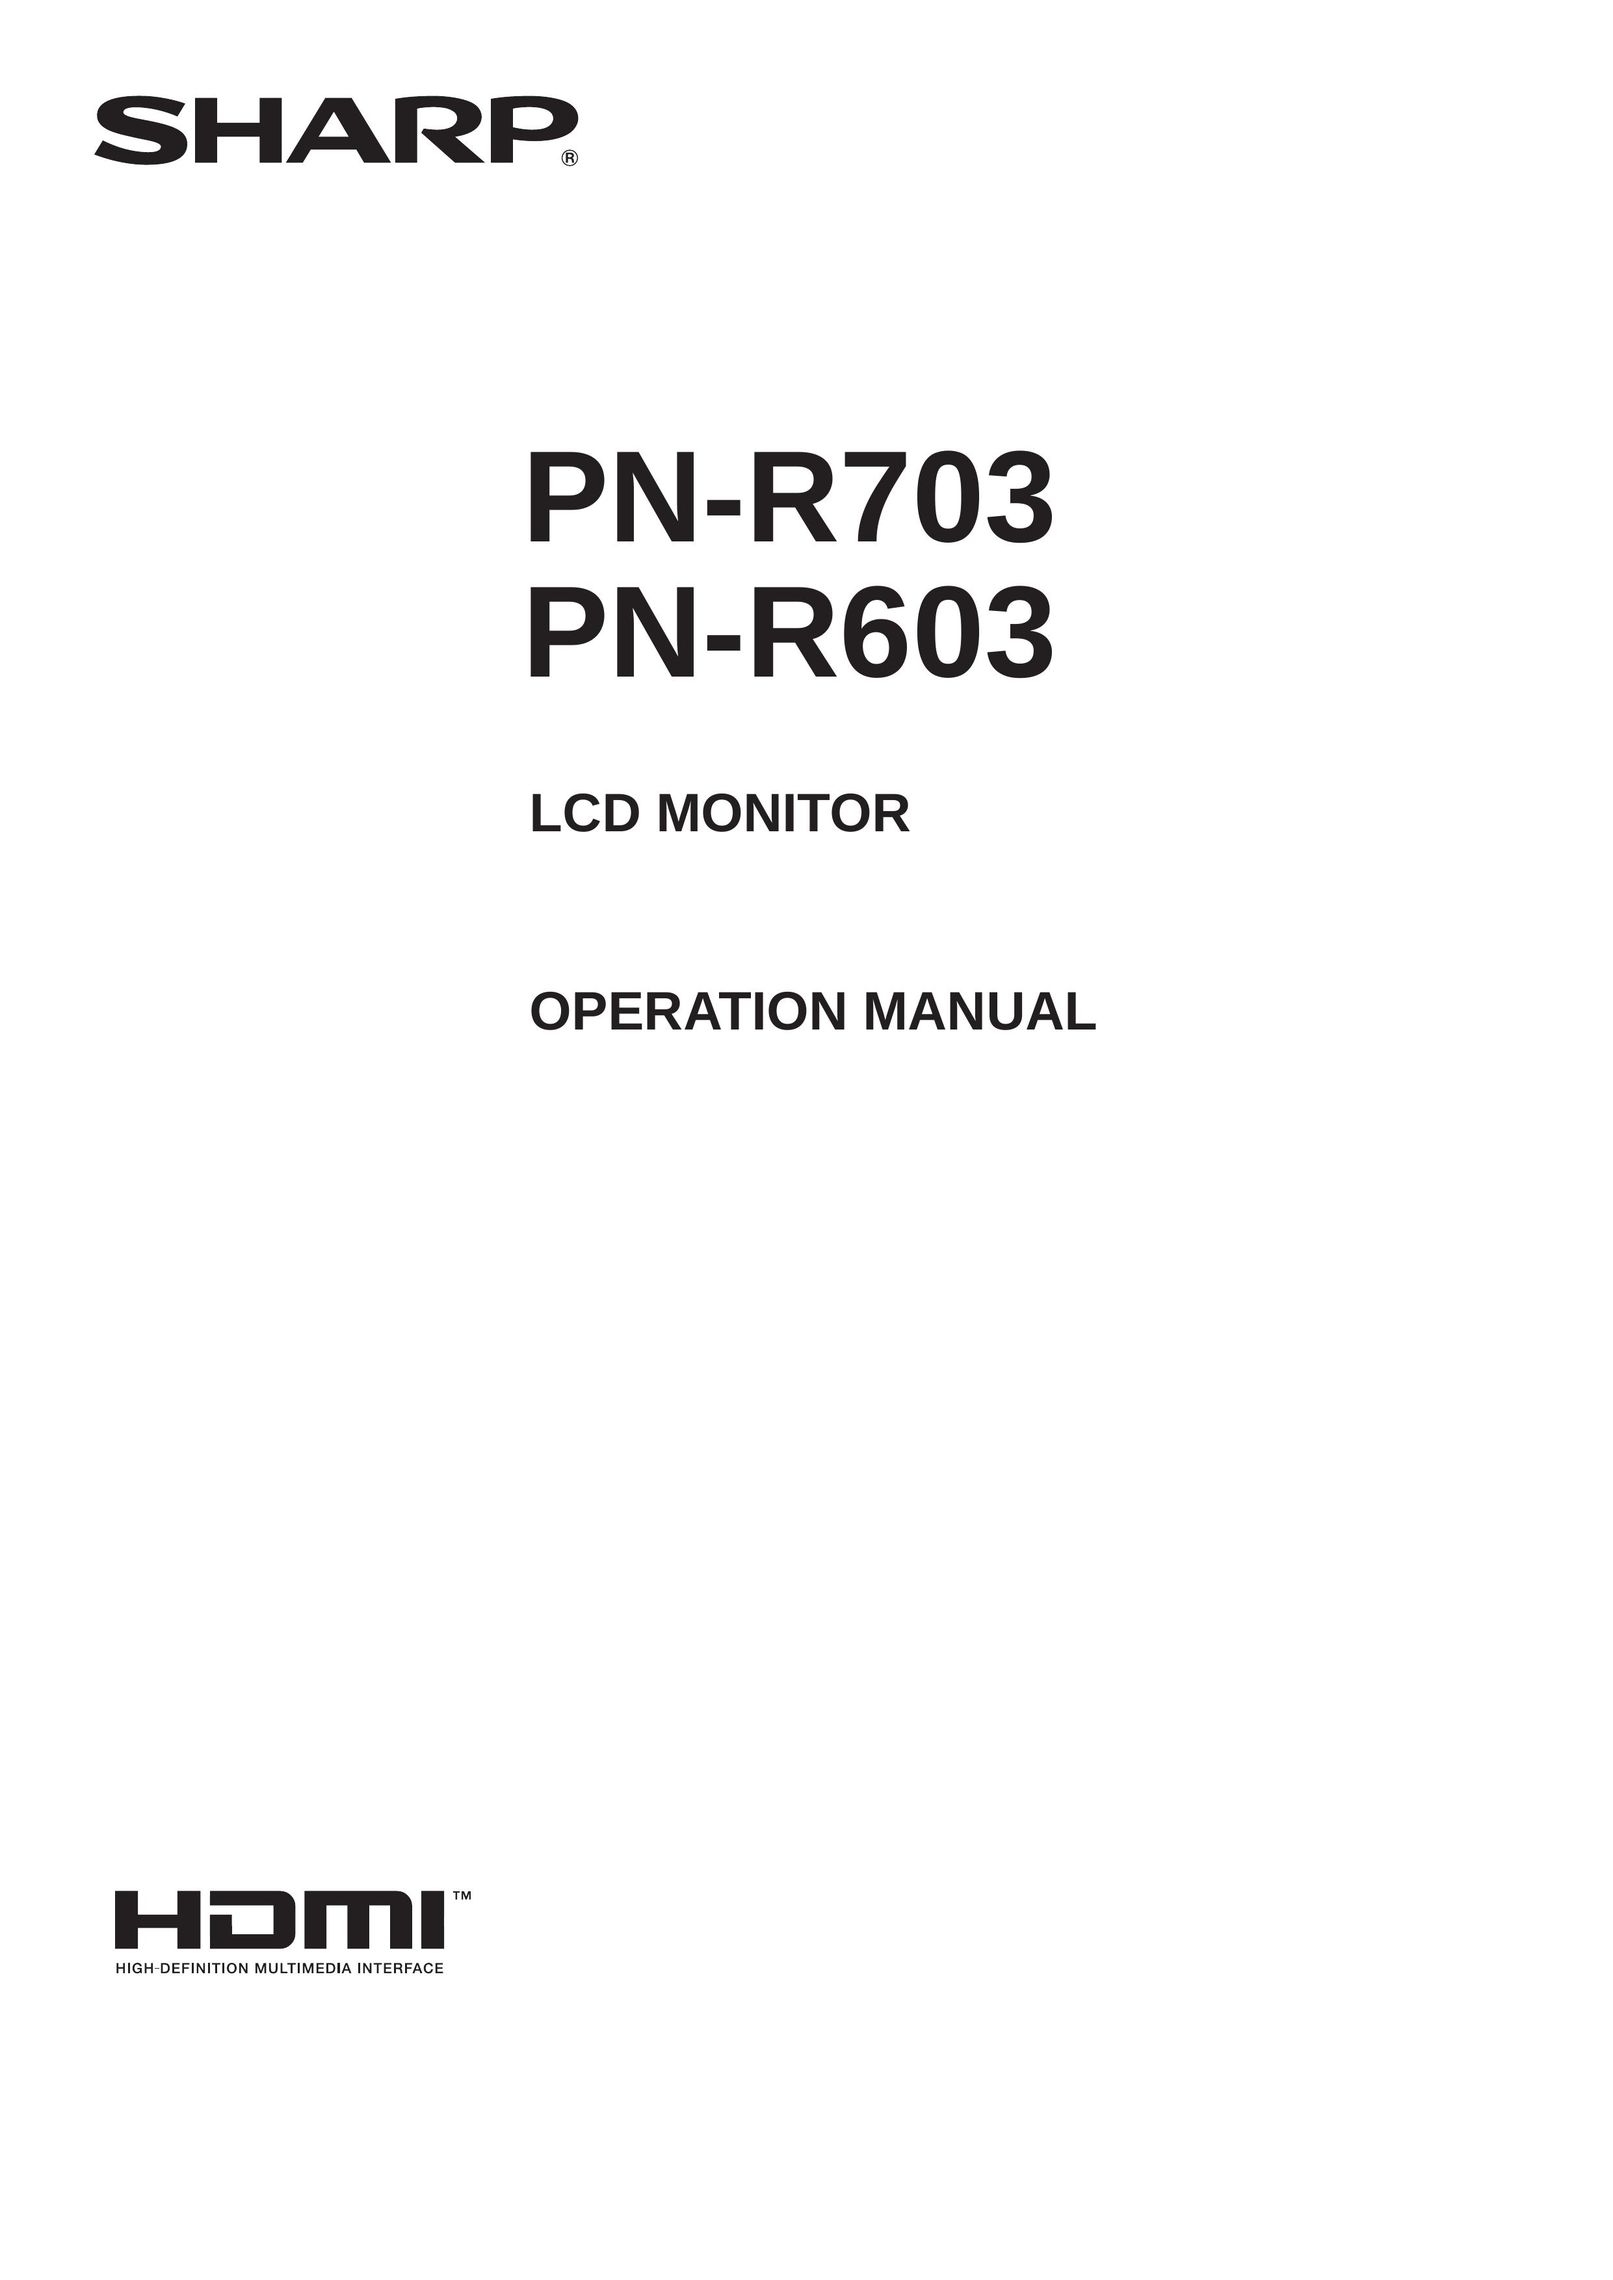 Sharp PN-R703 Computer Monitor User Manual